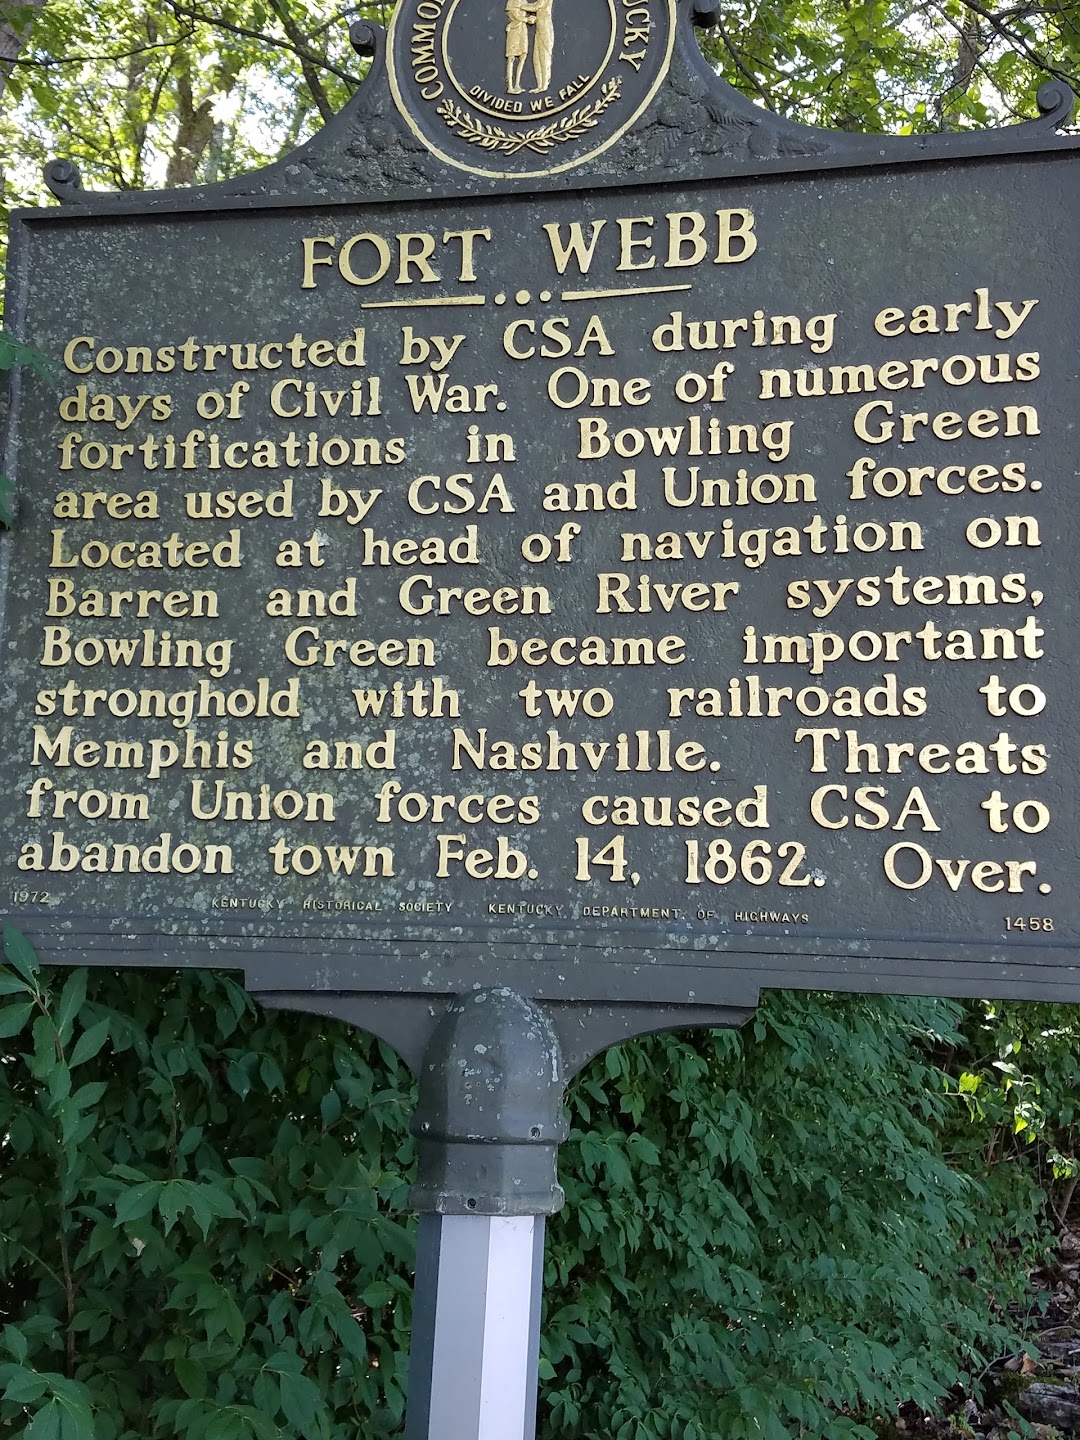 Fort Webb Park